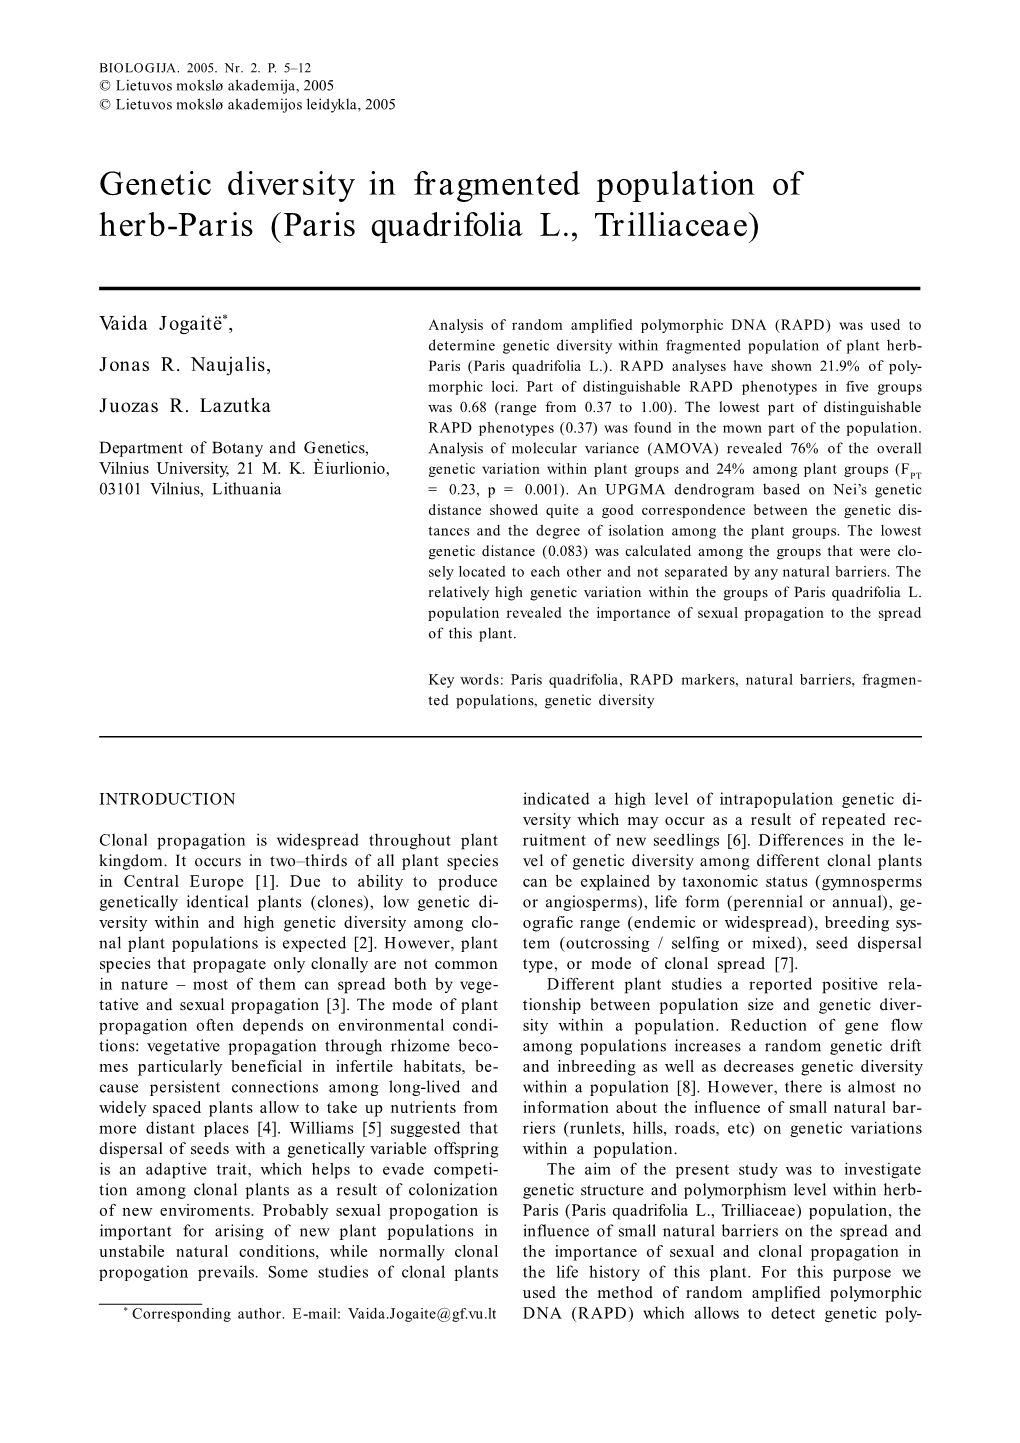 Genetic Diversity in Fragmented Population of Herb-Paris (Paris Quadrifolia L., Trilliaceae) 5 © Lietuvos Mokslø Akademijos Leidykla, 2005